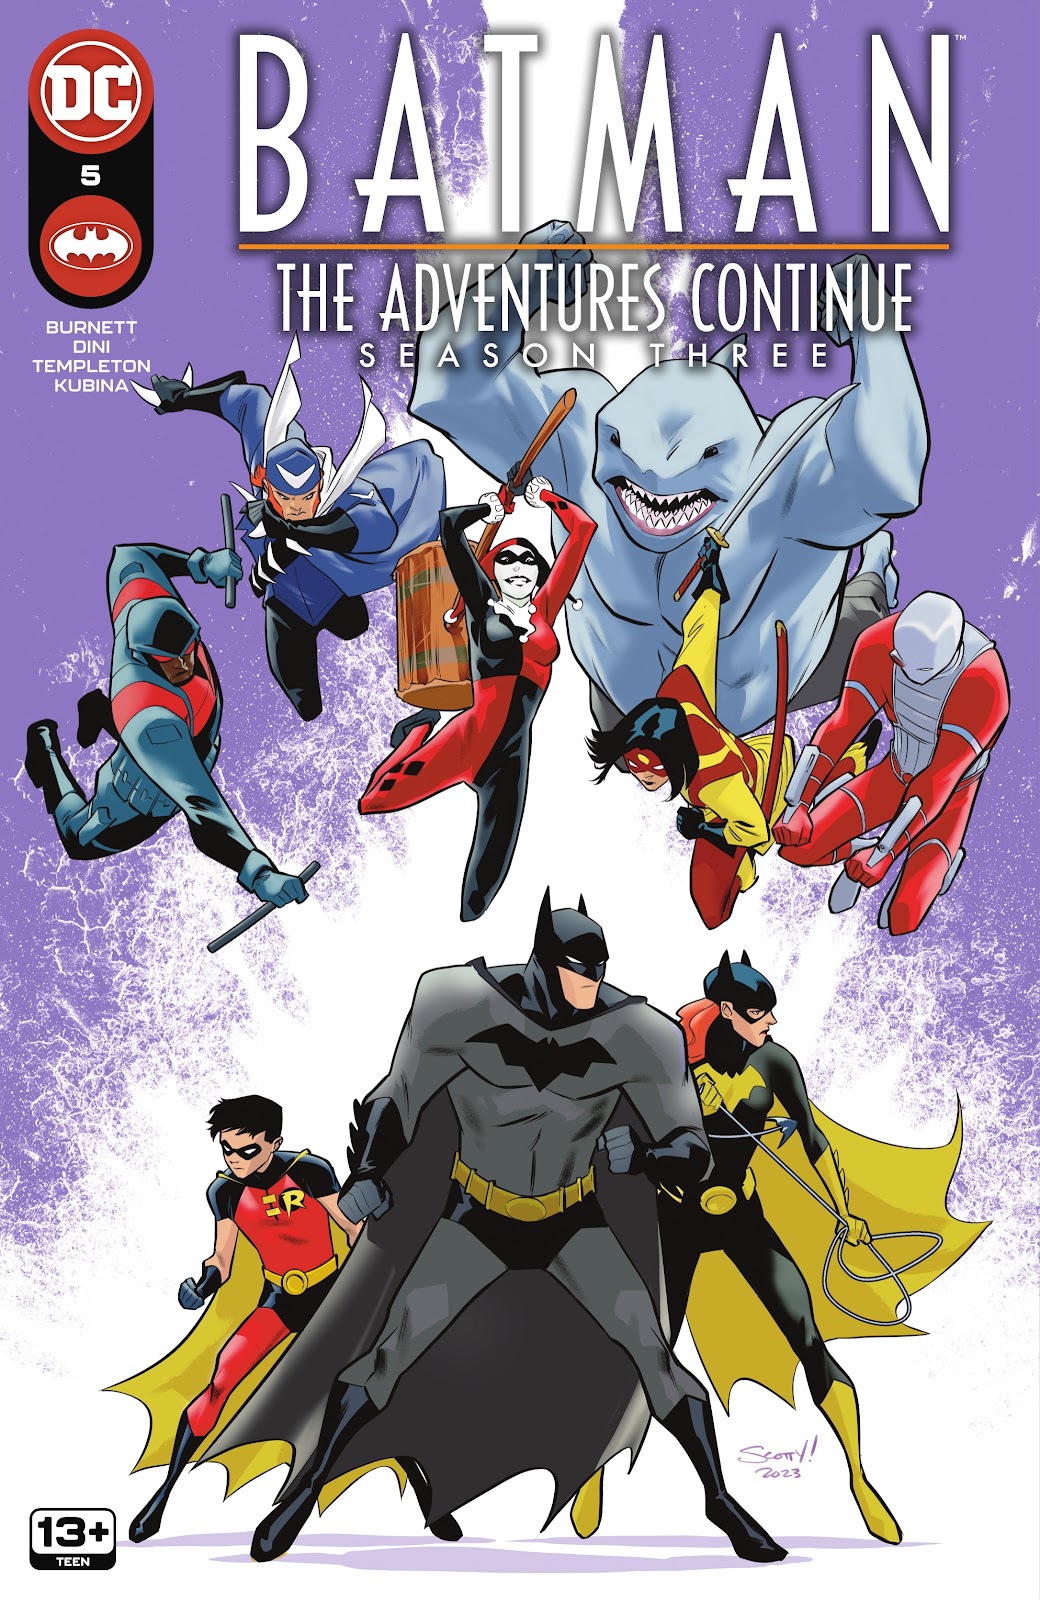 Batman: The Adventures Continue Season Three issue 5 - Page 1